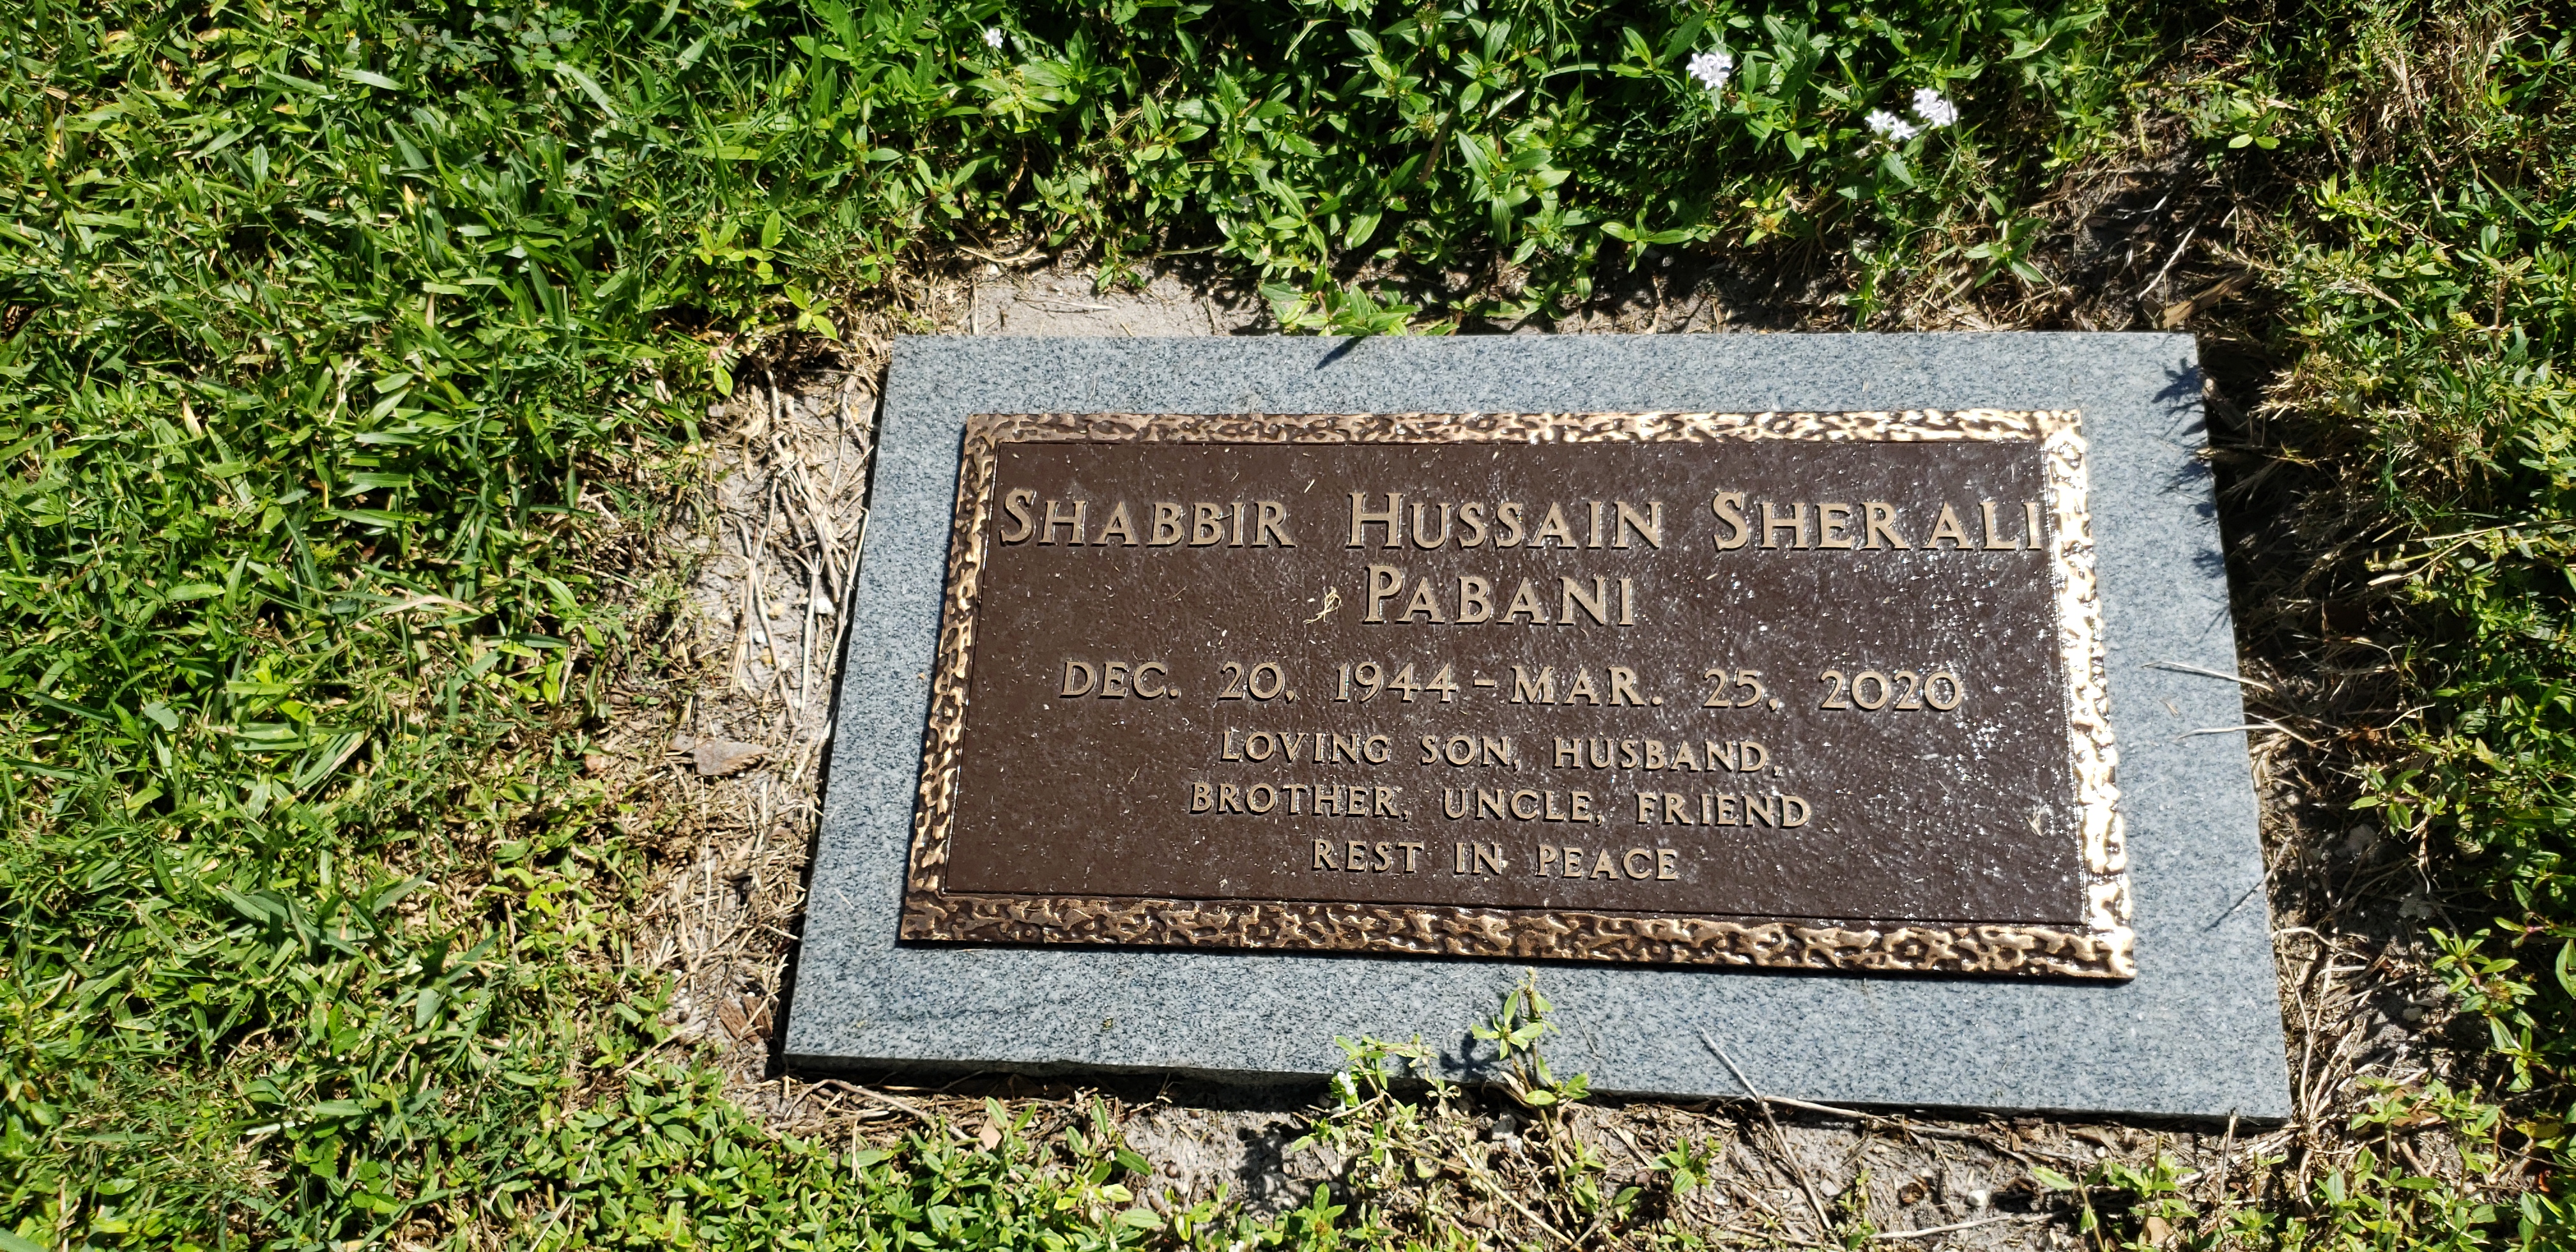 Shabbir Hussain Sherali Pabani